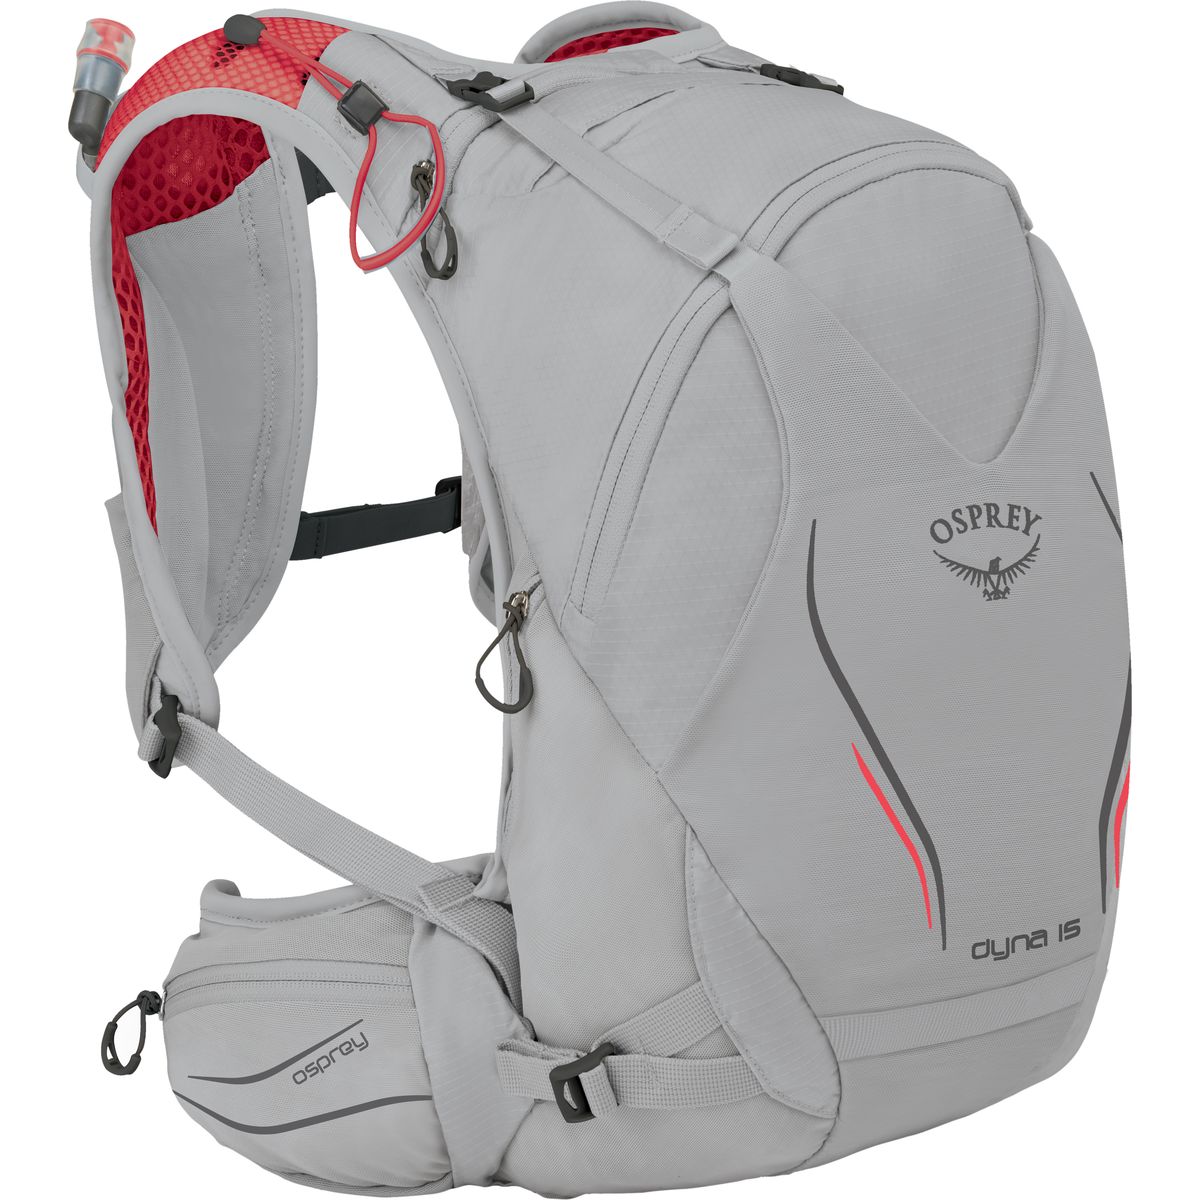 Osprey Packs Dyna 15L Backpack - Women's